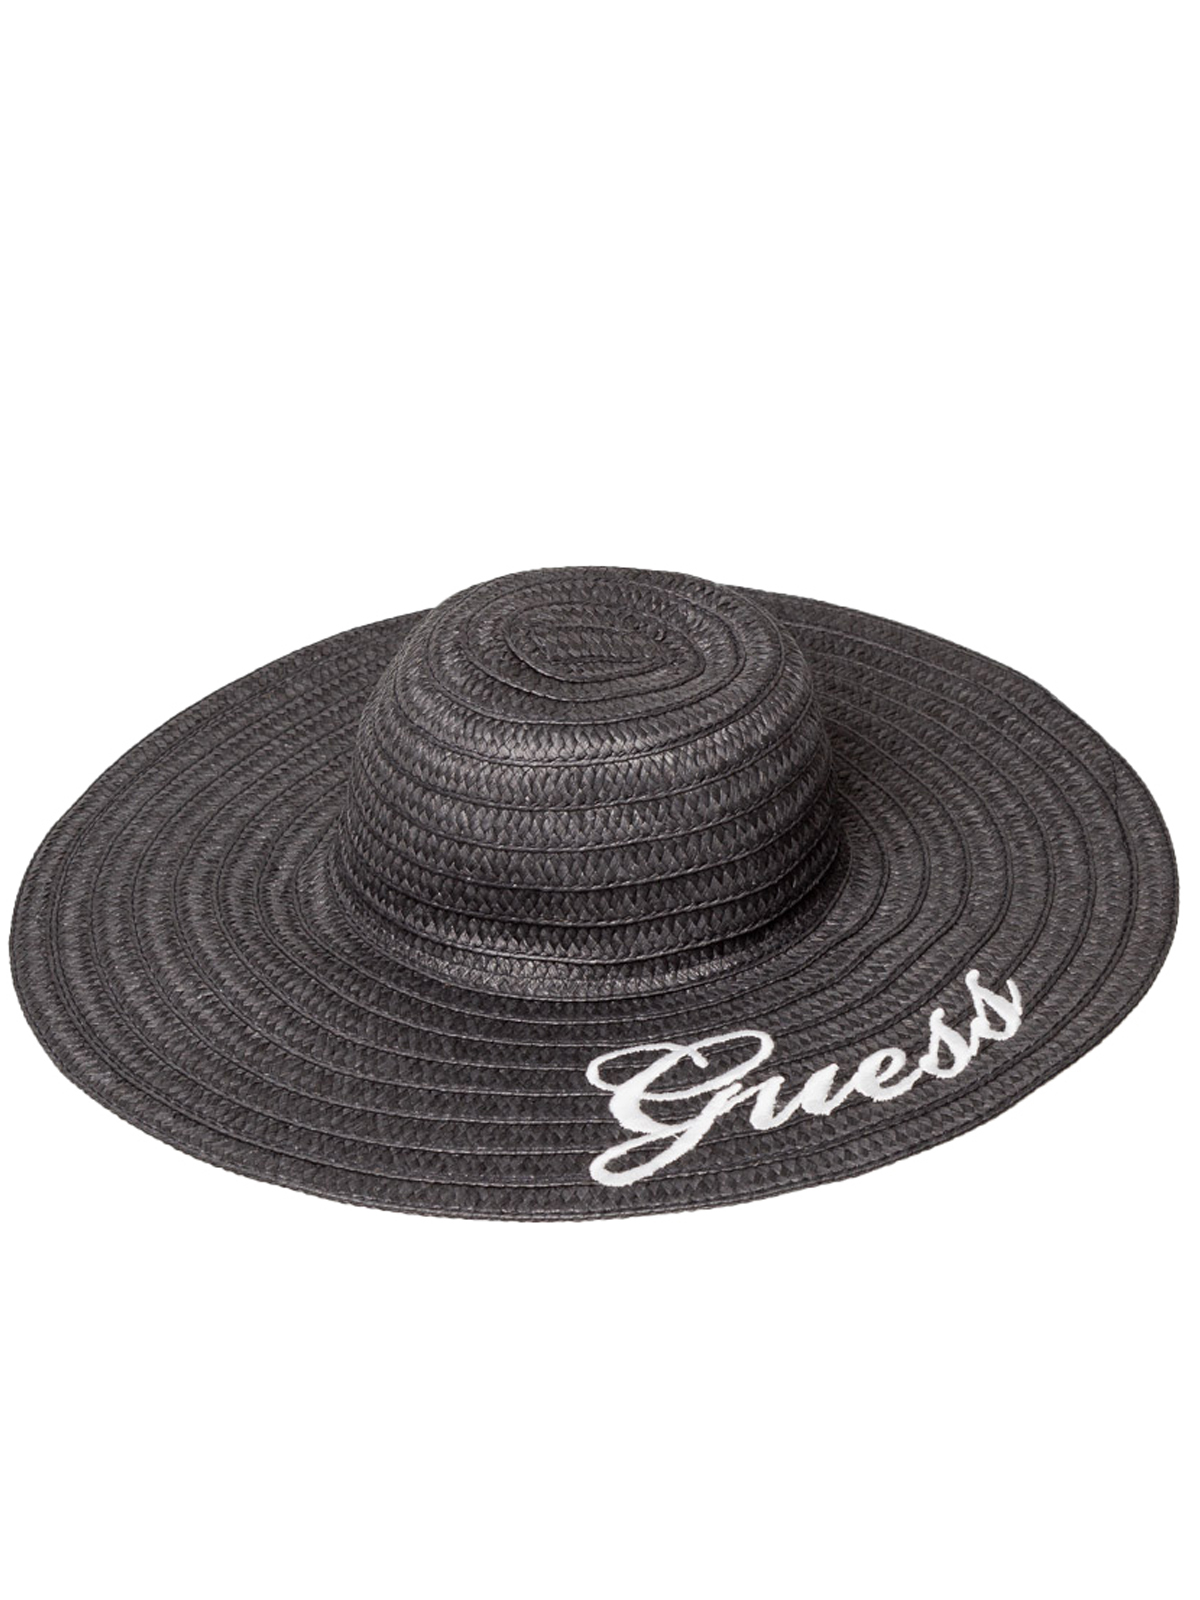   GUESS | Womans Summer Hat | Hats